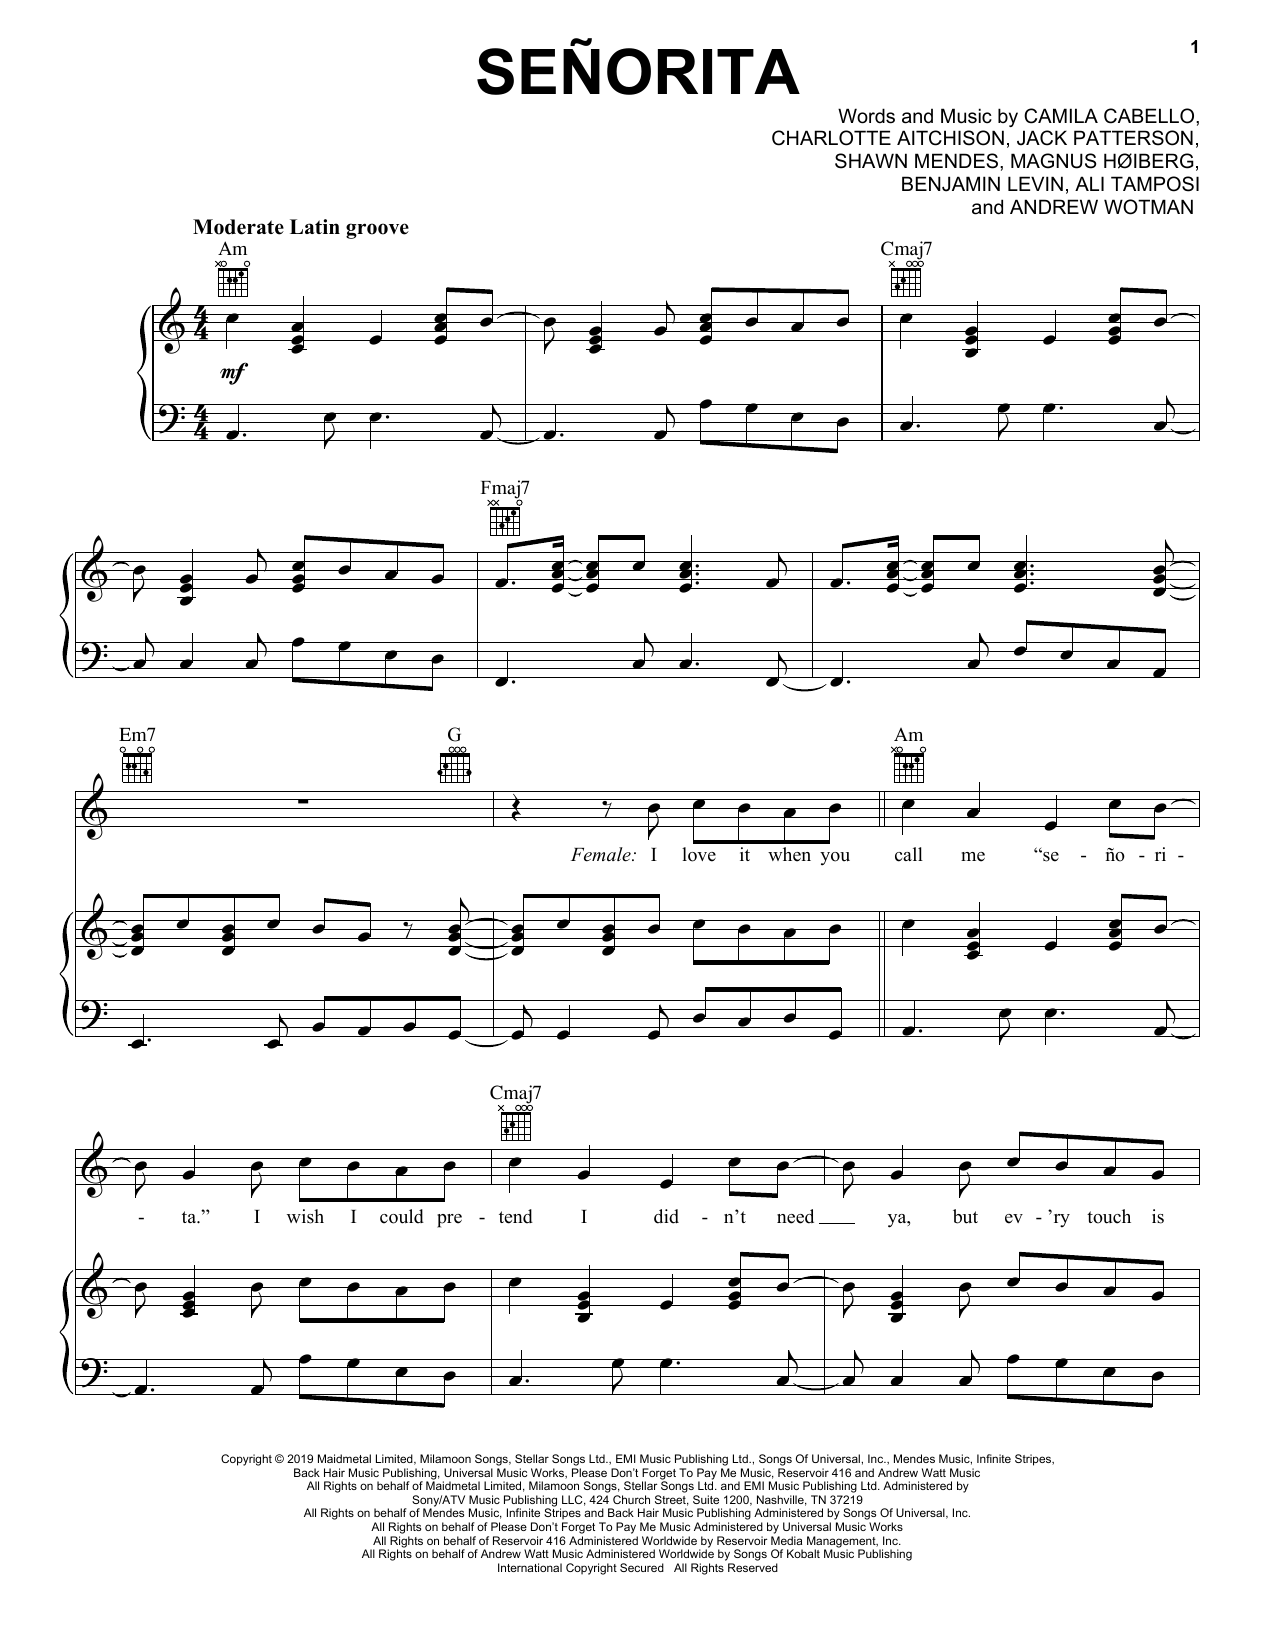 Shawn Mendes & Camila Cabello Señorita Sheet Music Notes & Chords for Easy Guitar Tab - Download or Print PDF